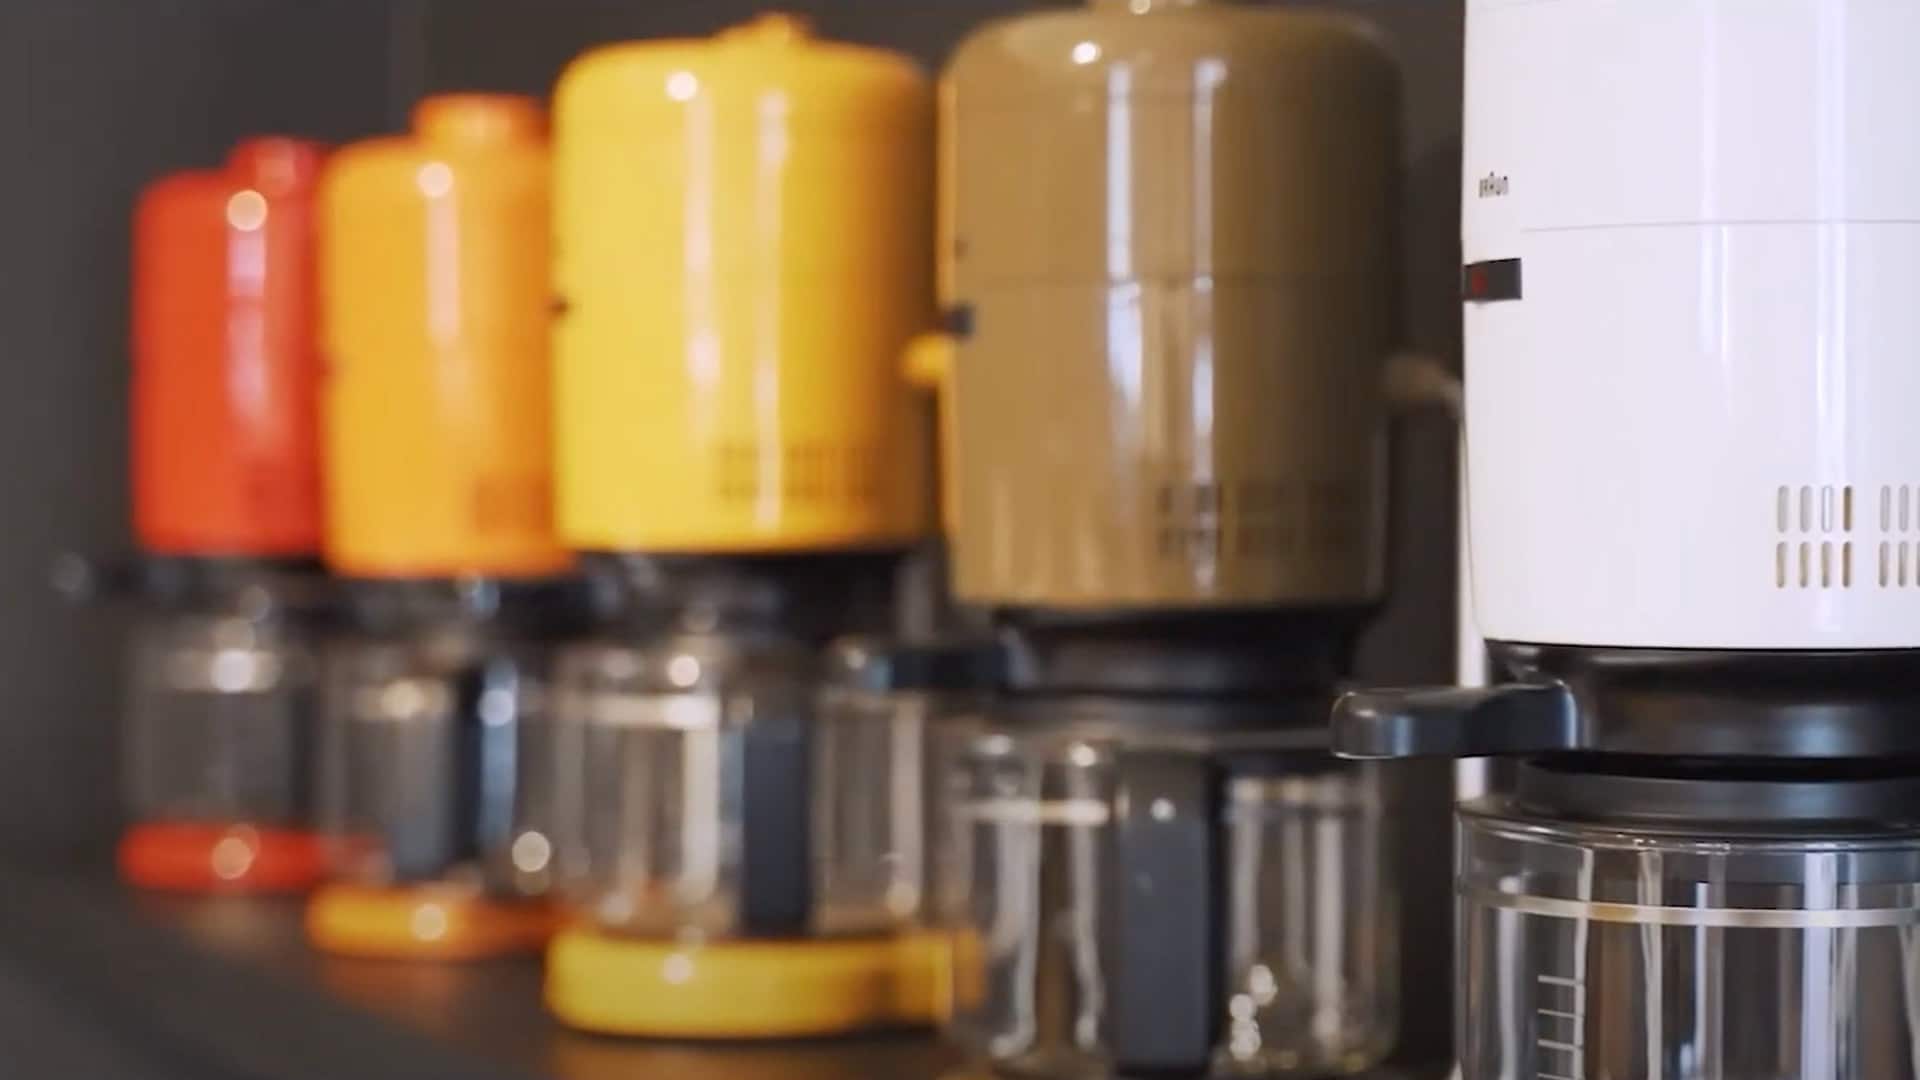 Braun museum - Coffee machines